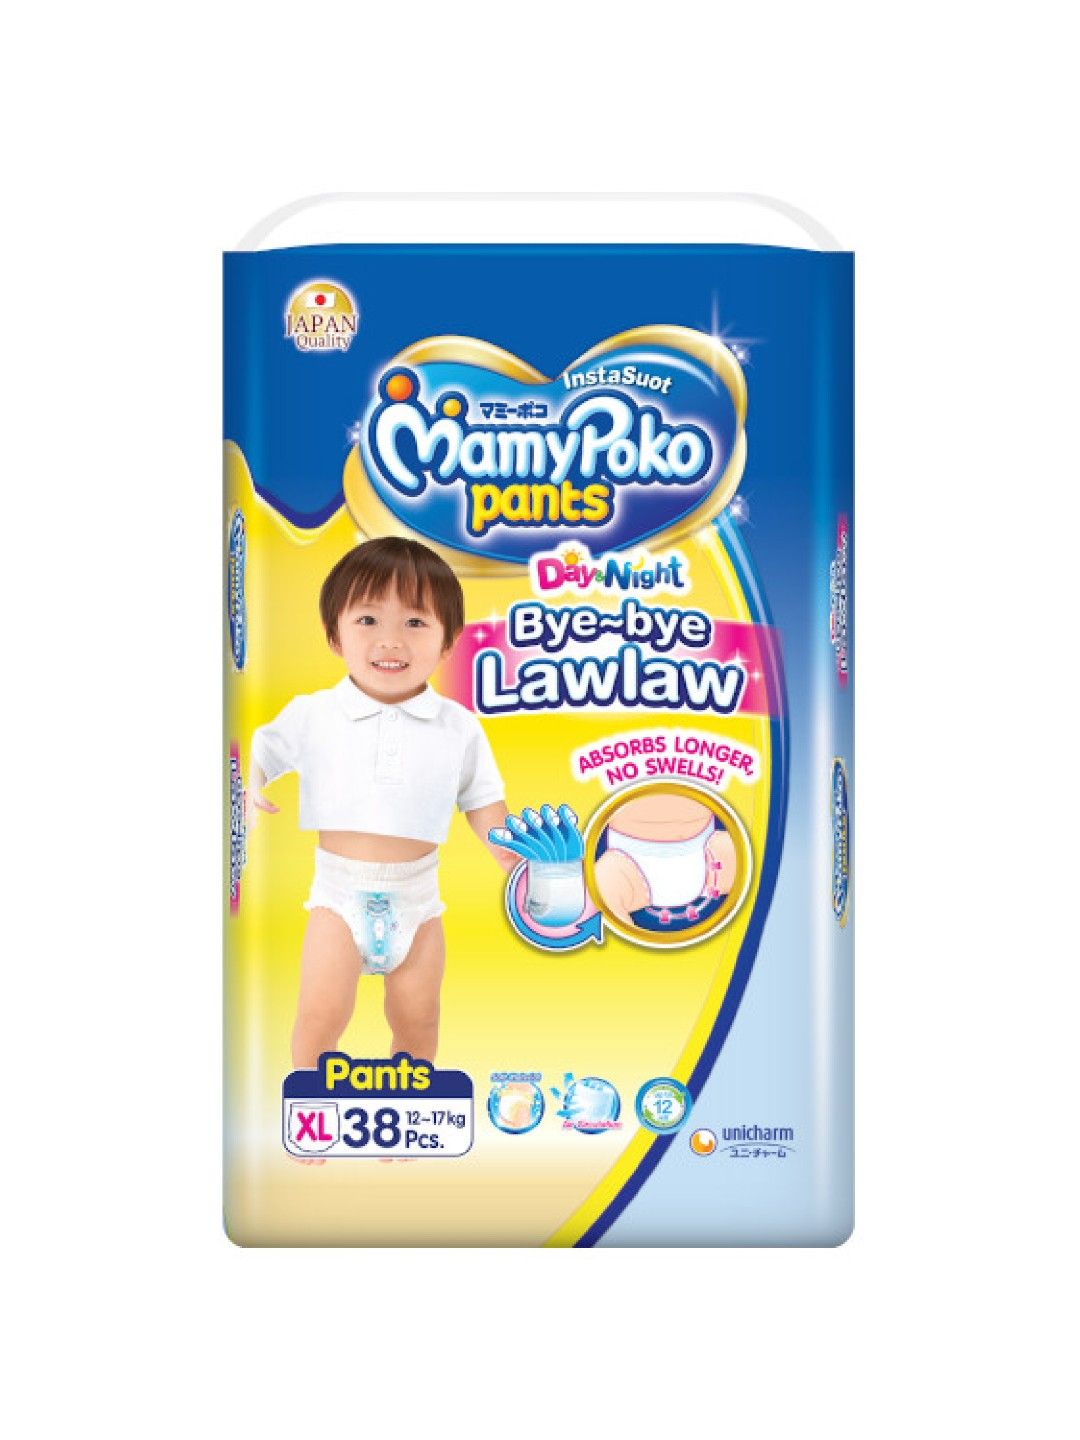 MamyPoko Pants Standard Diaper (XL, 12-17 kg) Price - Buy Online at ₹504 in  India